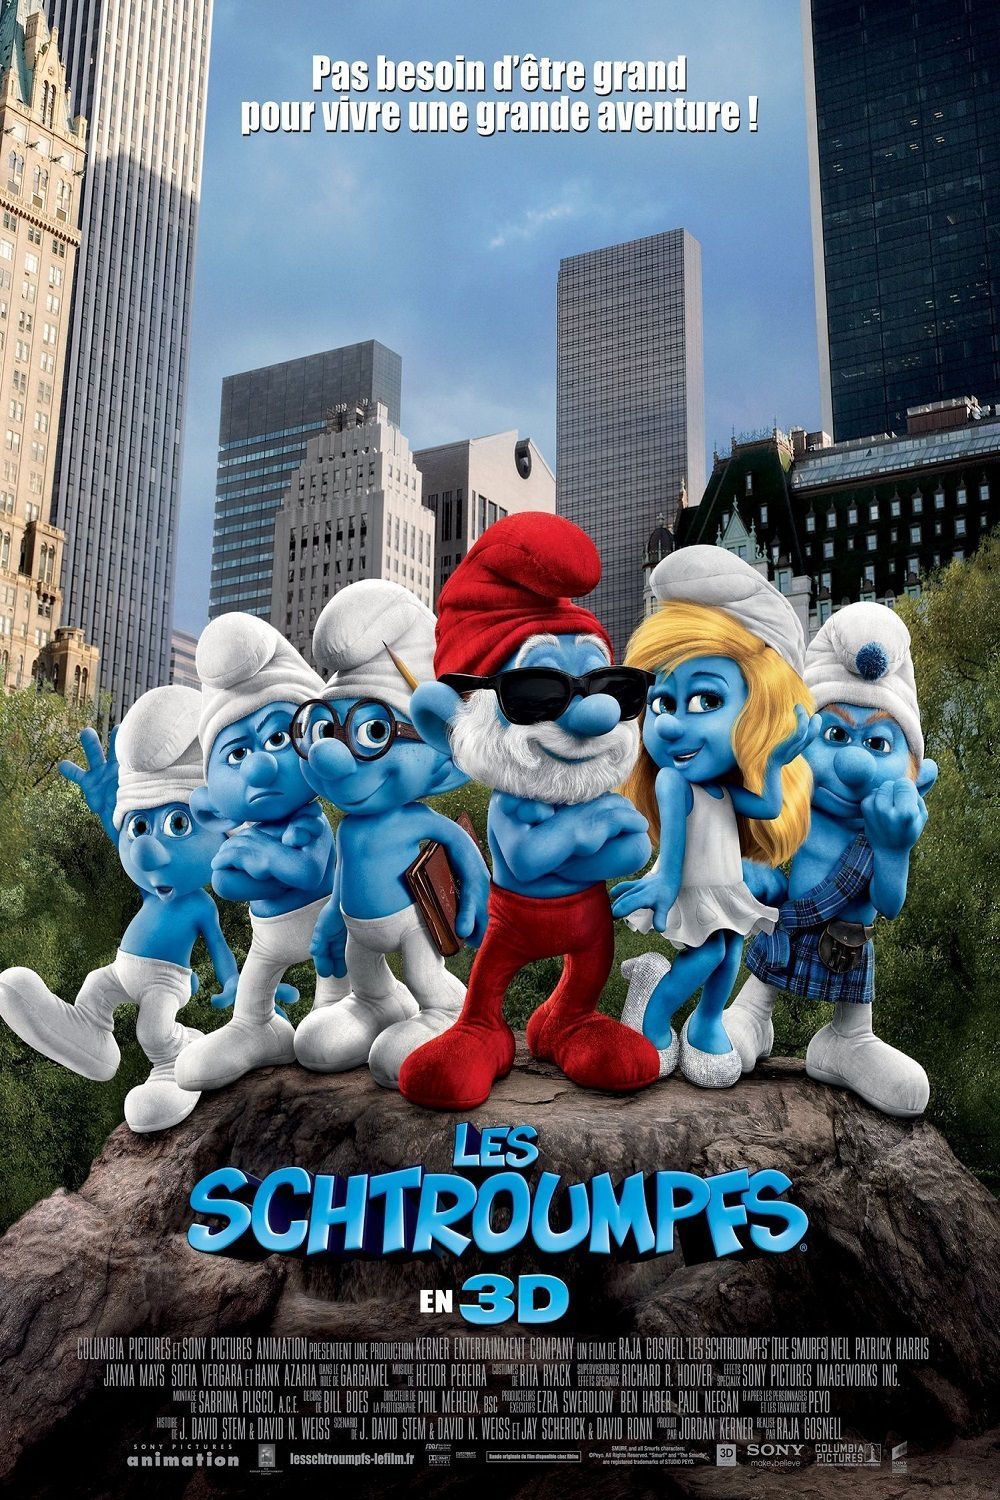 Les Schtroumpfs - Film (2011) streaming VF gratuit complet